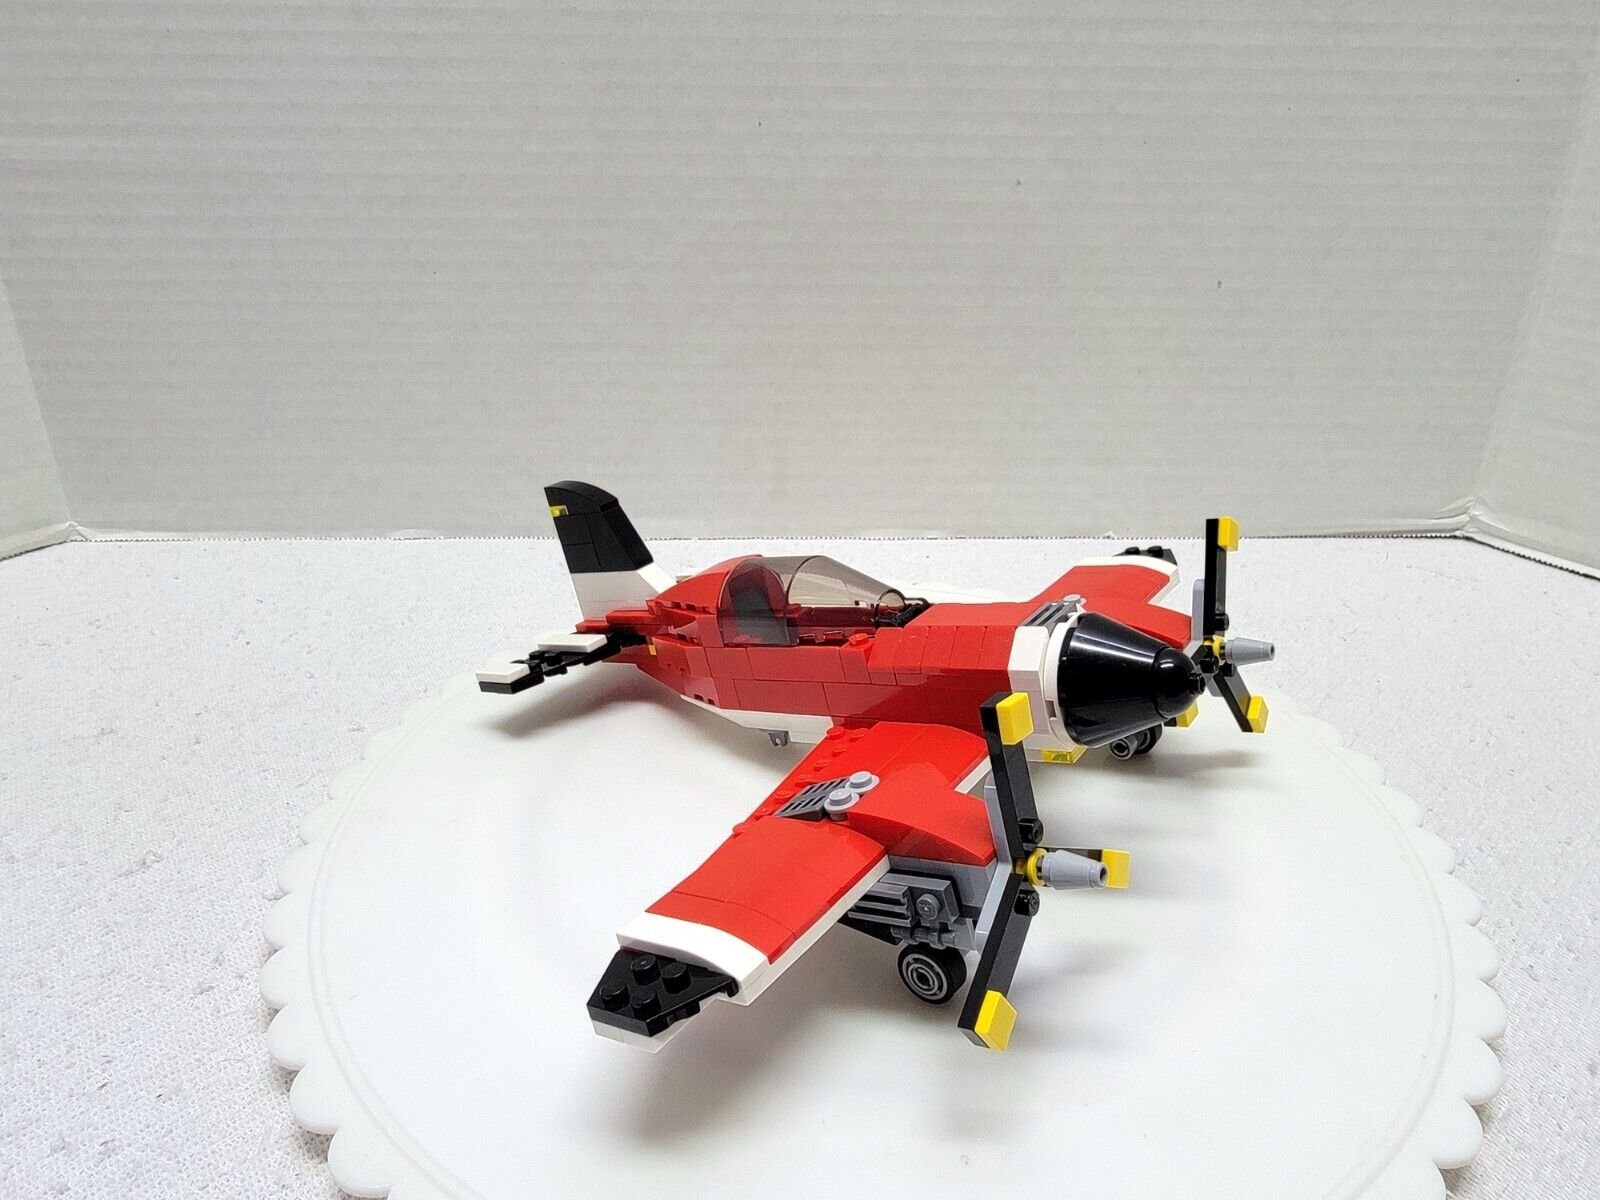 Lego 31047 - Propeller Plane - 2016 - 100% Build Complete